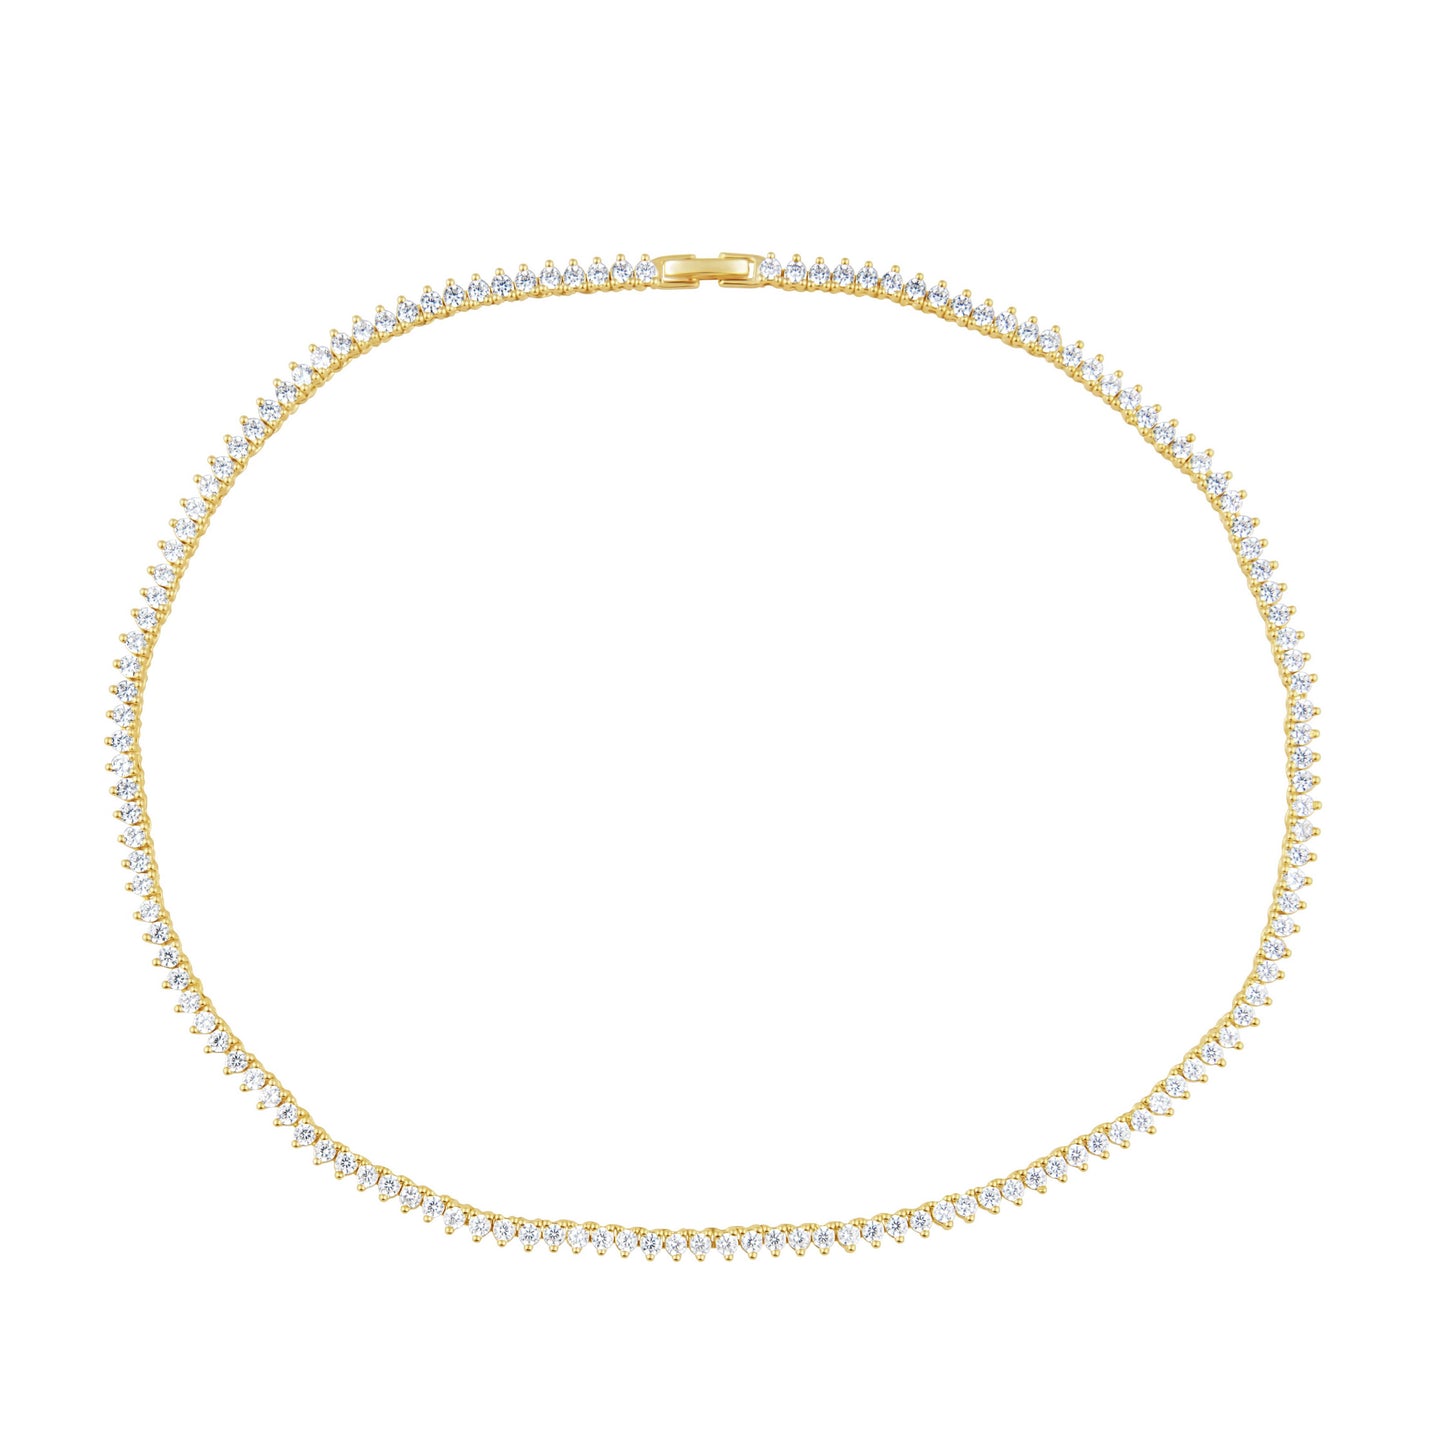 Sahira Jewelry Design - Melinda Tennis Necklace